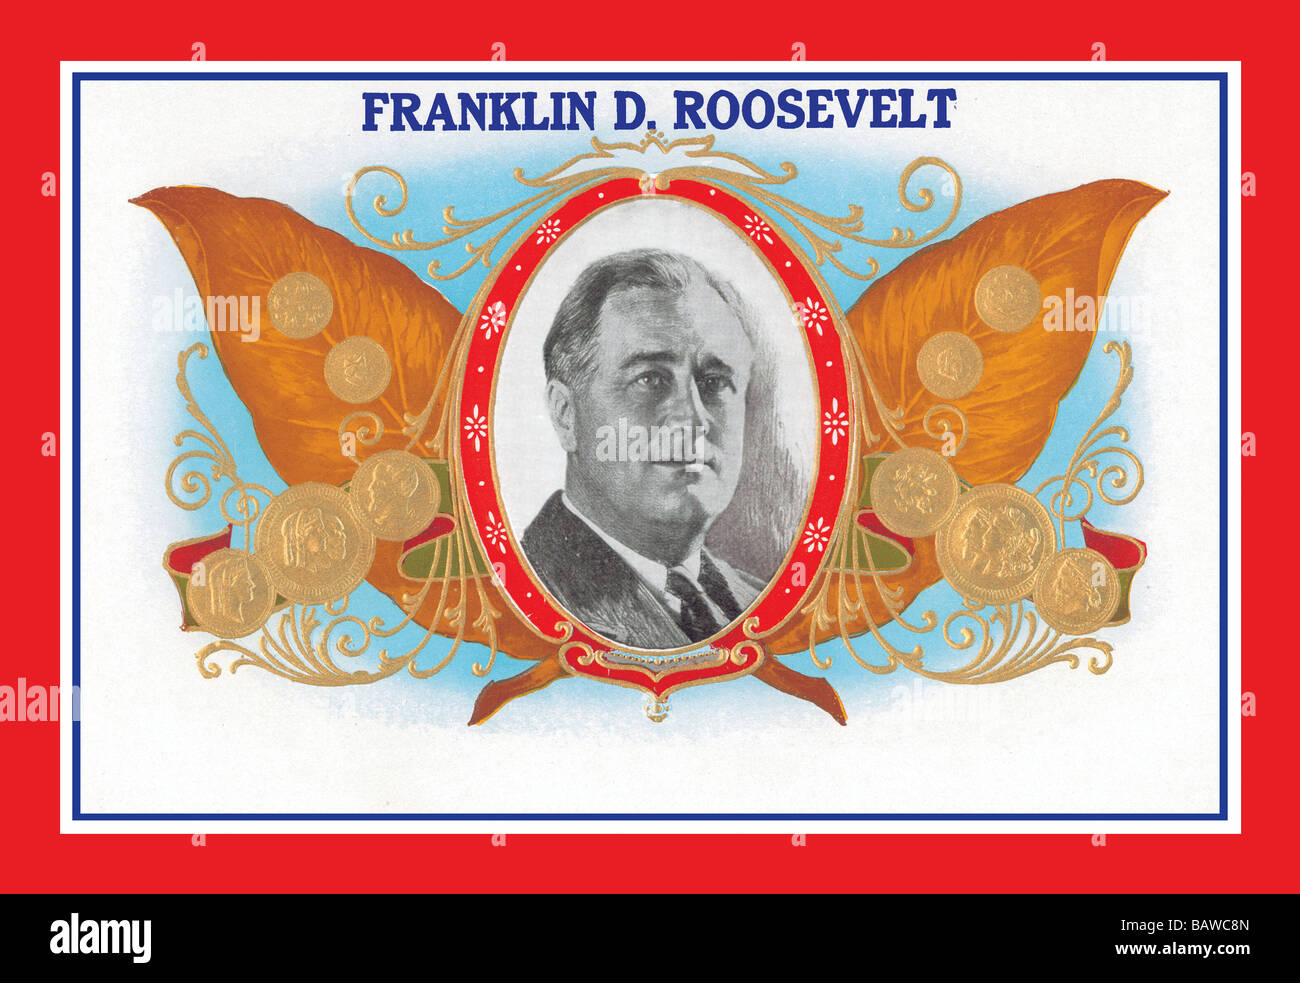 Franklin D. Roosevelt Cigars Stock Photo